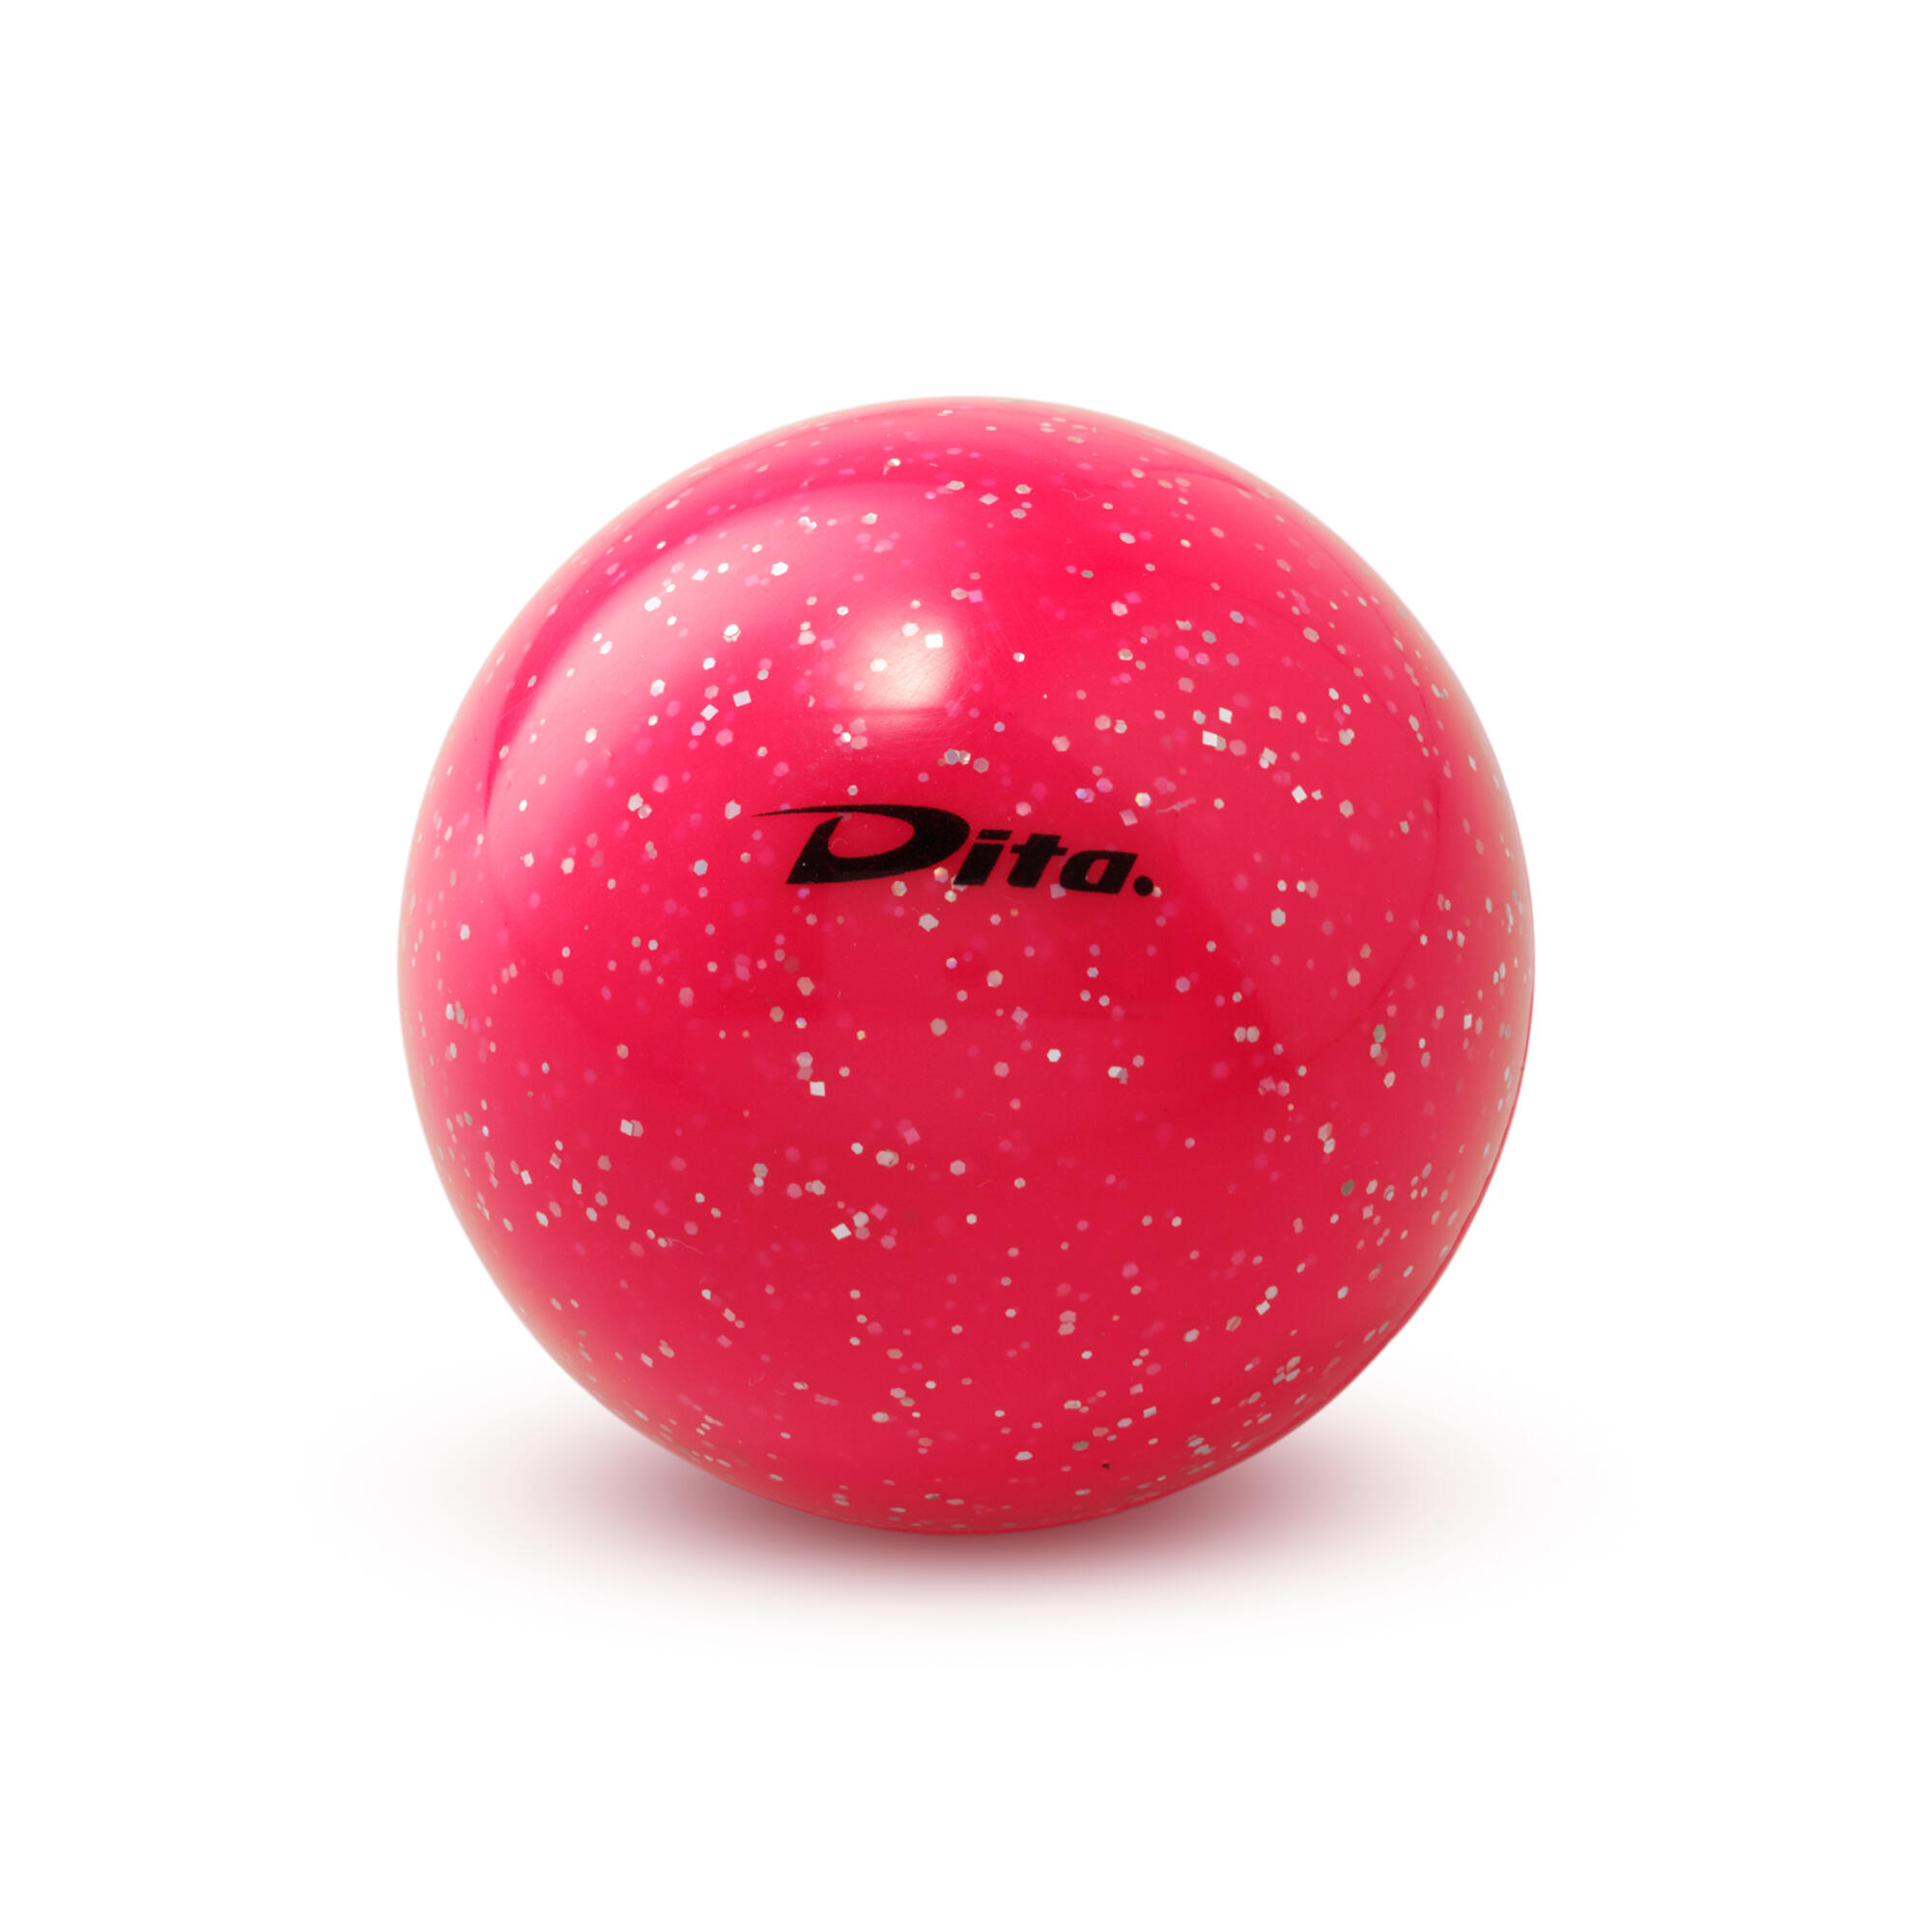 DITA Smooth Field Hockey Ball - Pink Glitter